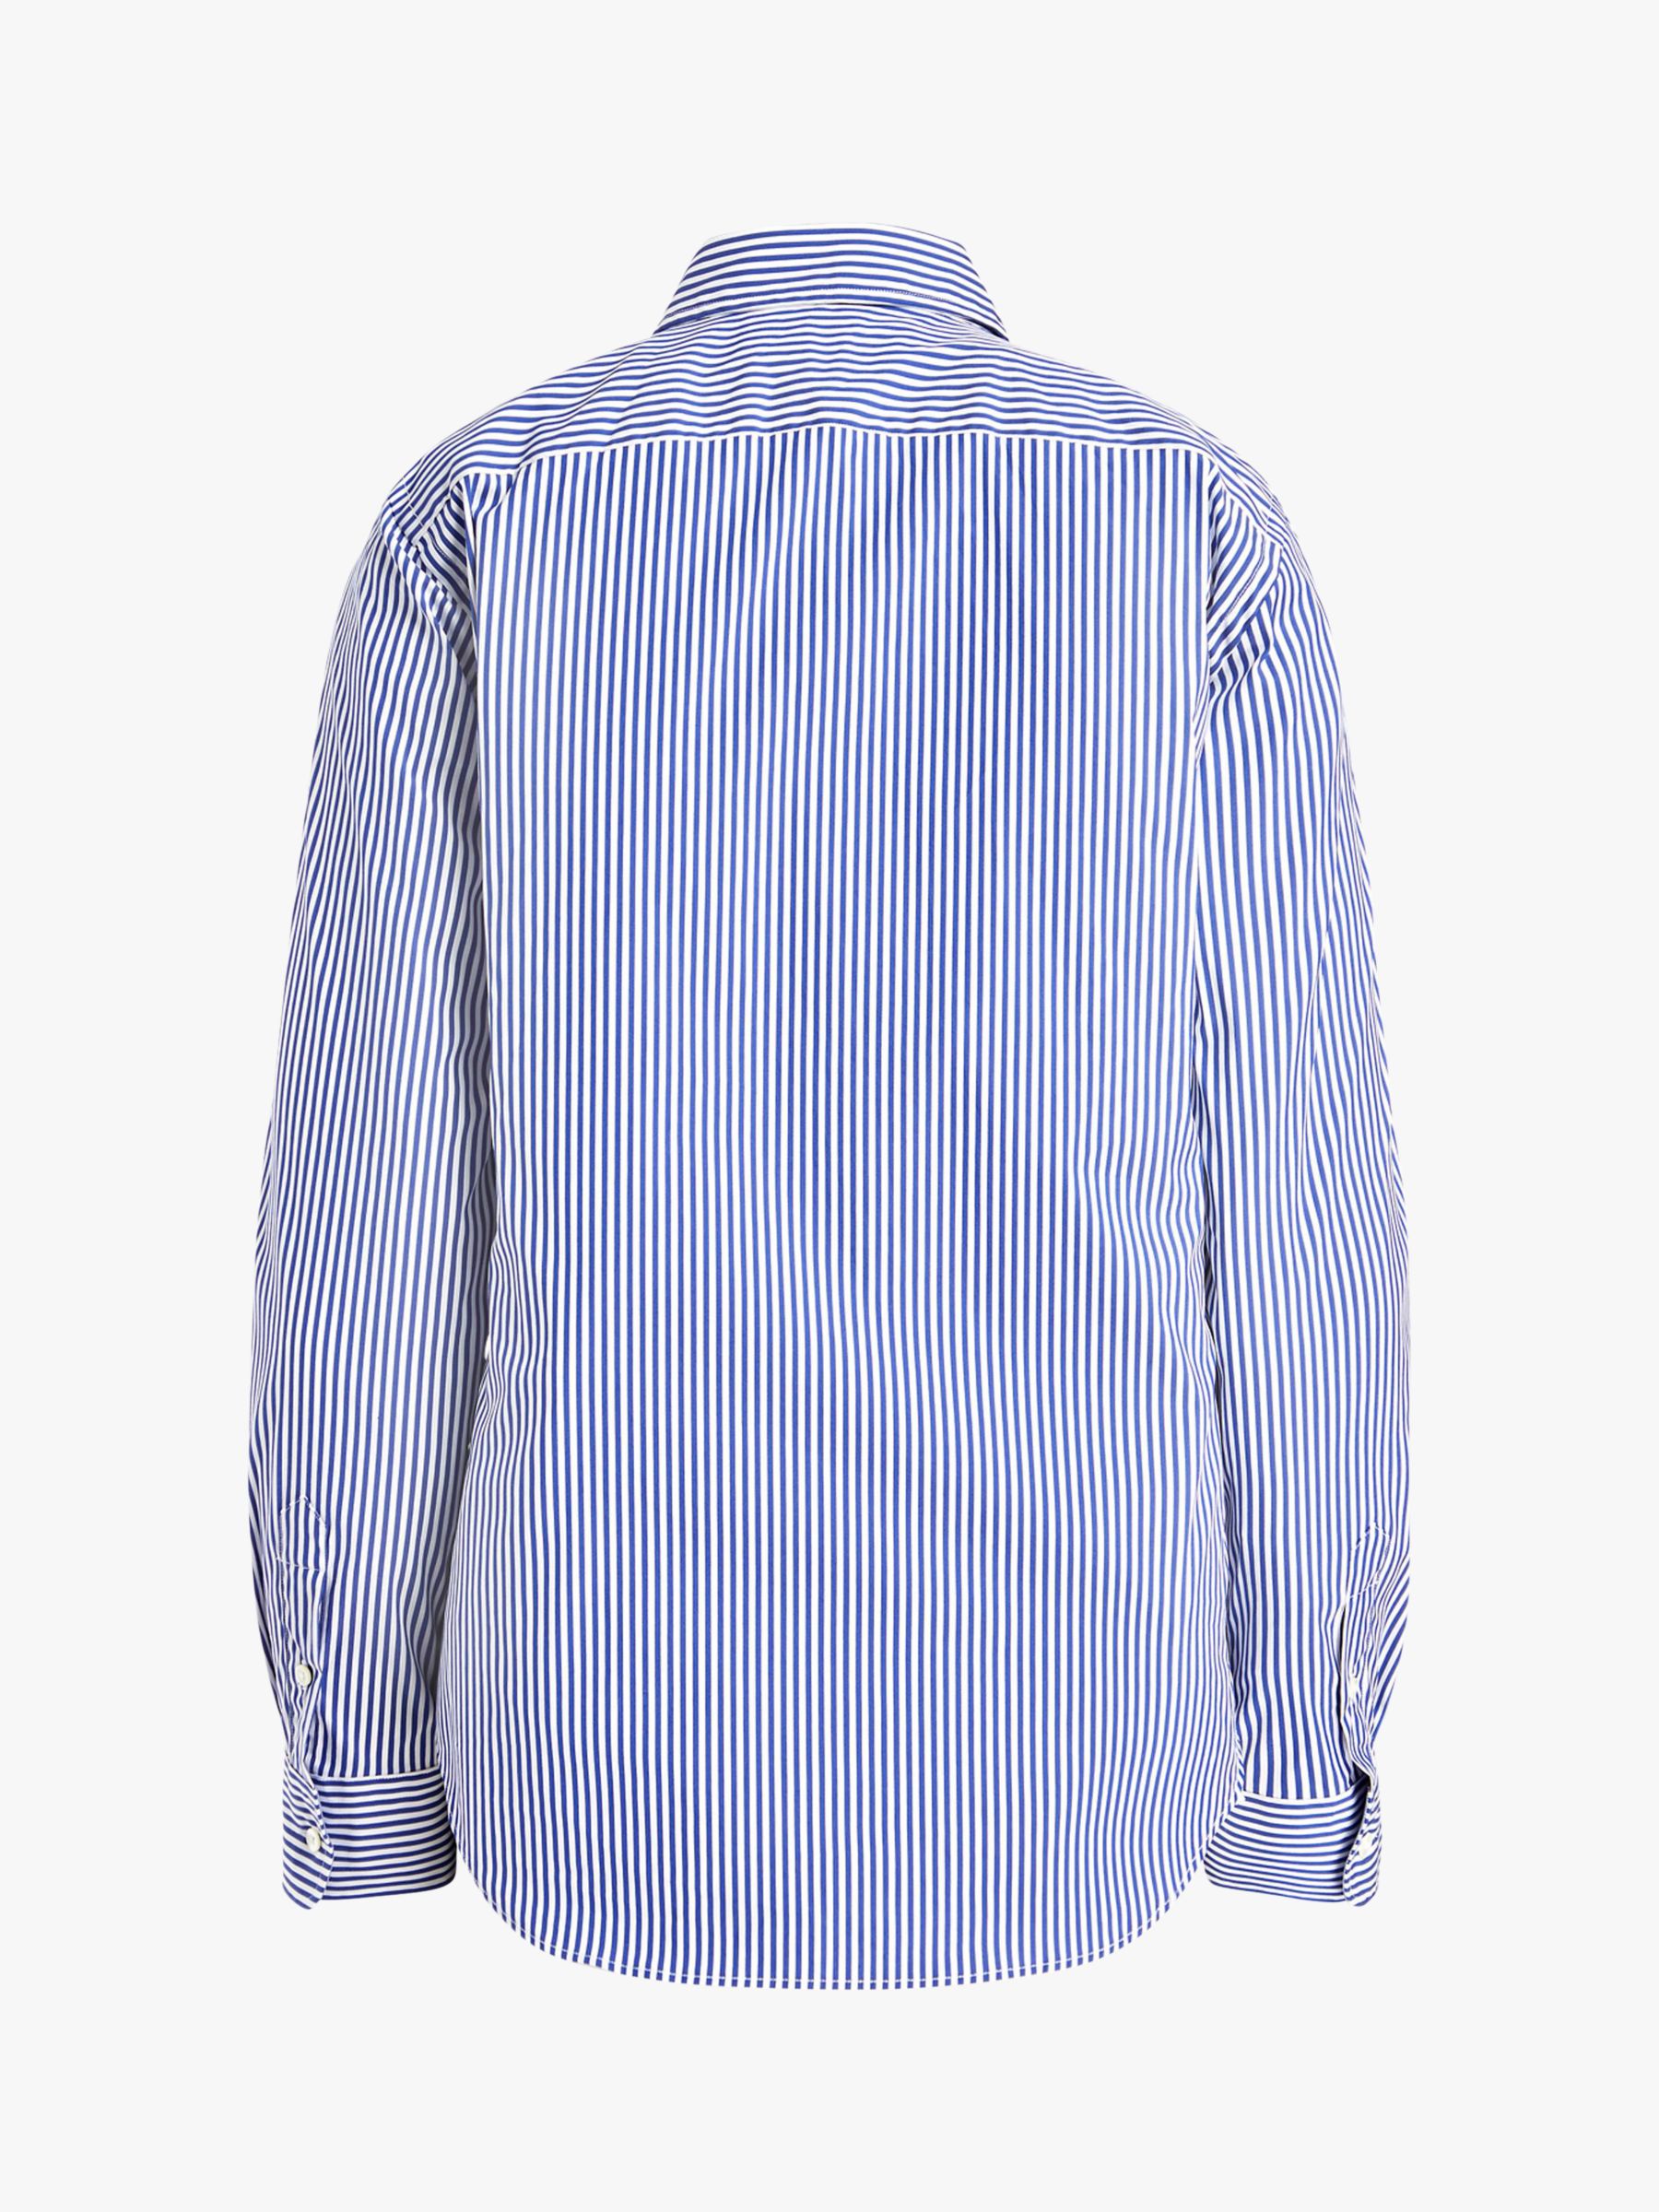 Polo Ralph Lauren Georgia Stripe Shirt, Navy/White